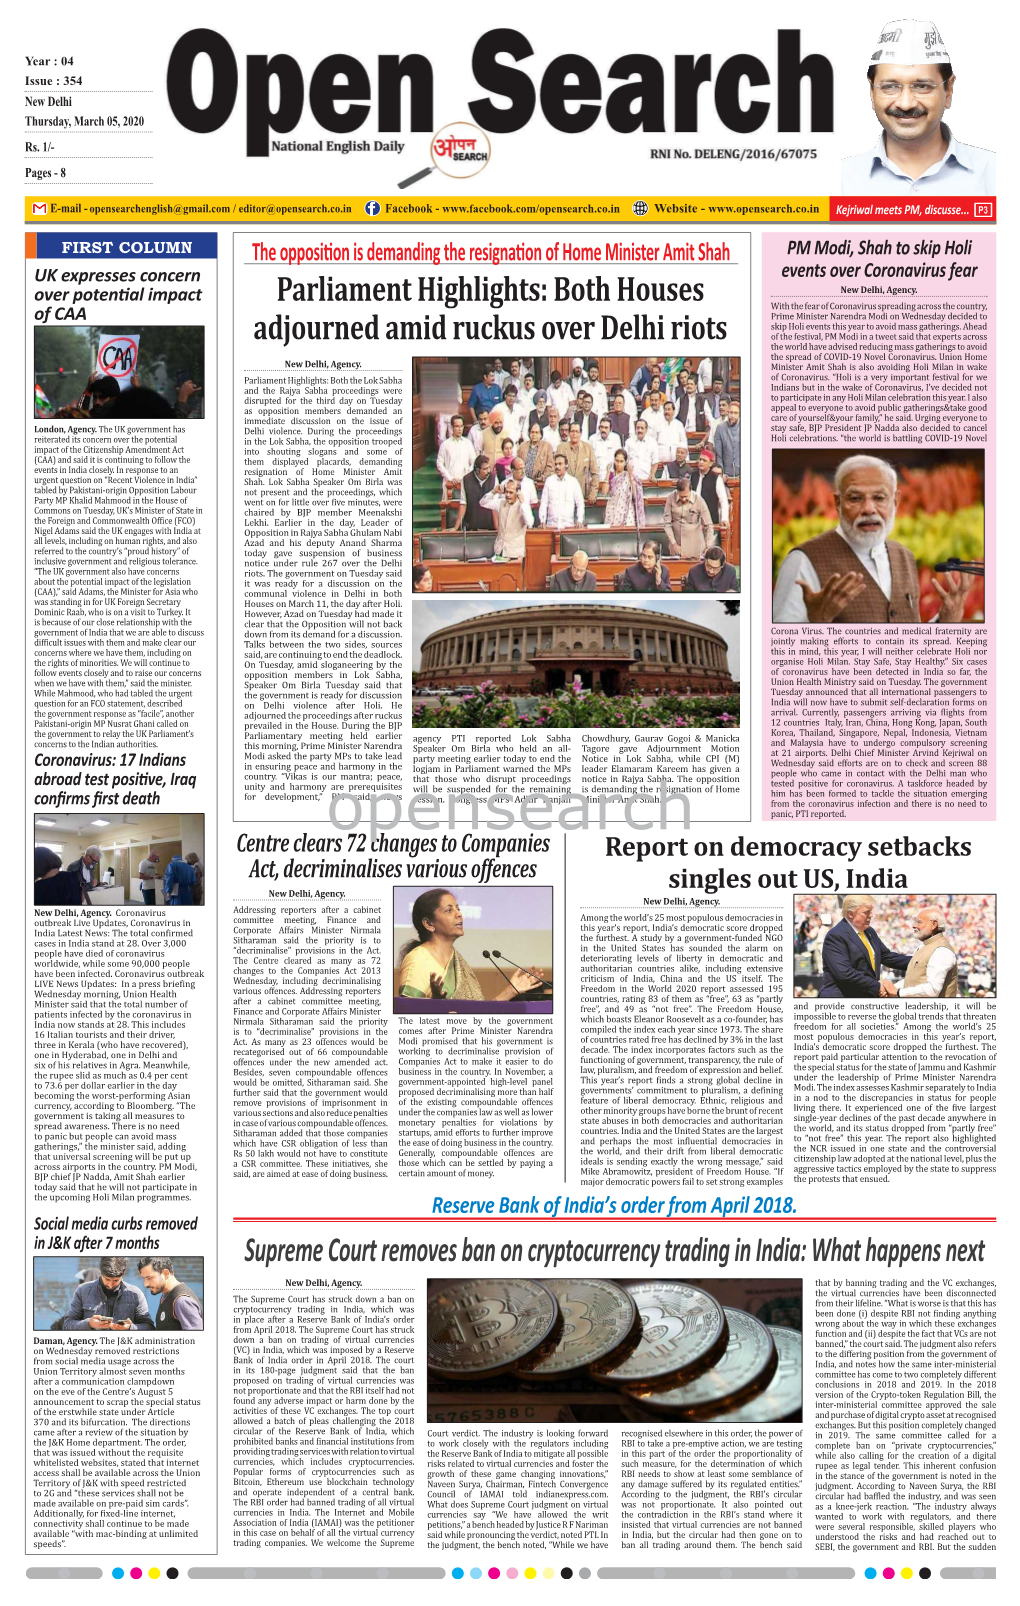 DELHI/NCR | | English Daily Open Search | 3 Kejriwal Meets PM, Discusses Police Action in NE Delhi Riots New Delhi Correspondent